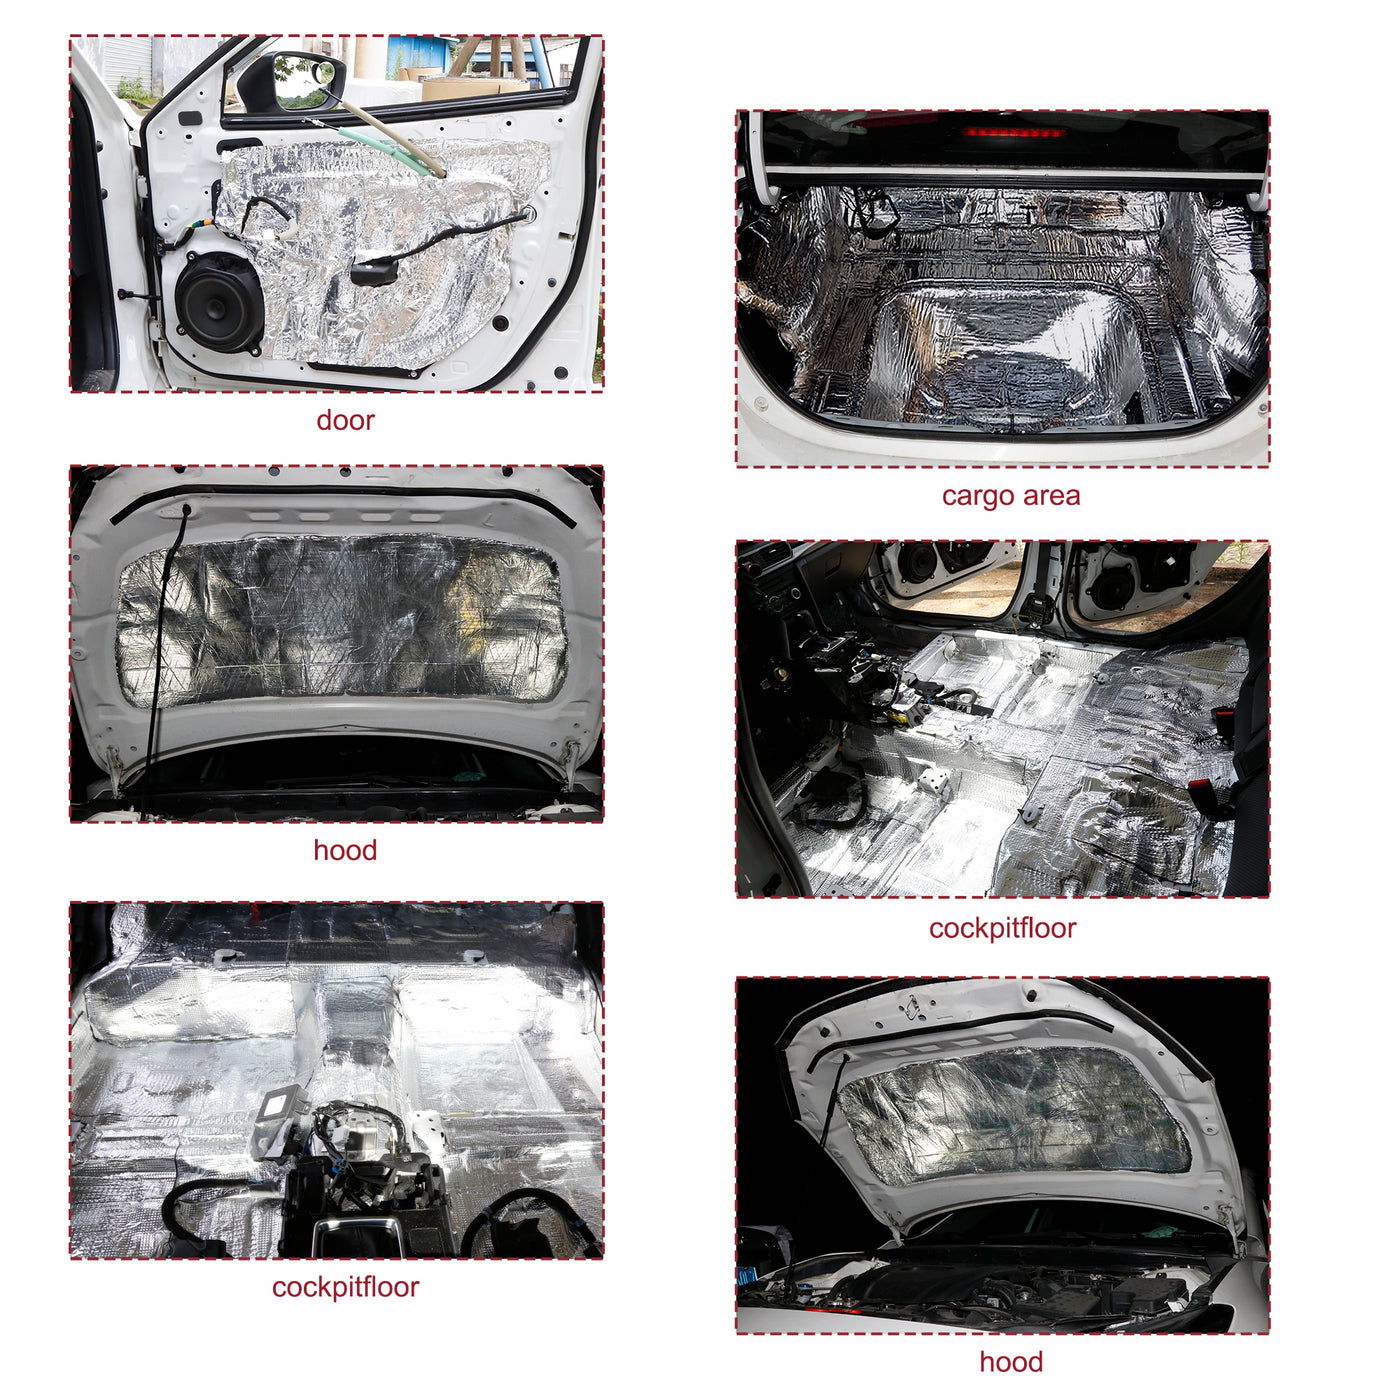 ACROPIX 197mil Car Rood Hood Heat Sound Deadener Insulation Mat 39" x 25" Silver Tone - Pack of 1